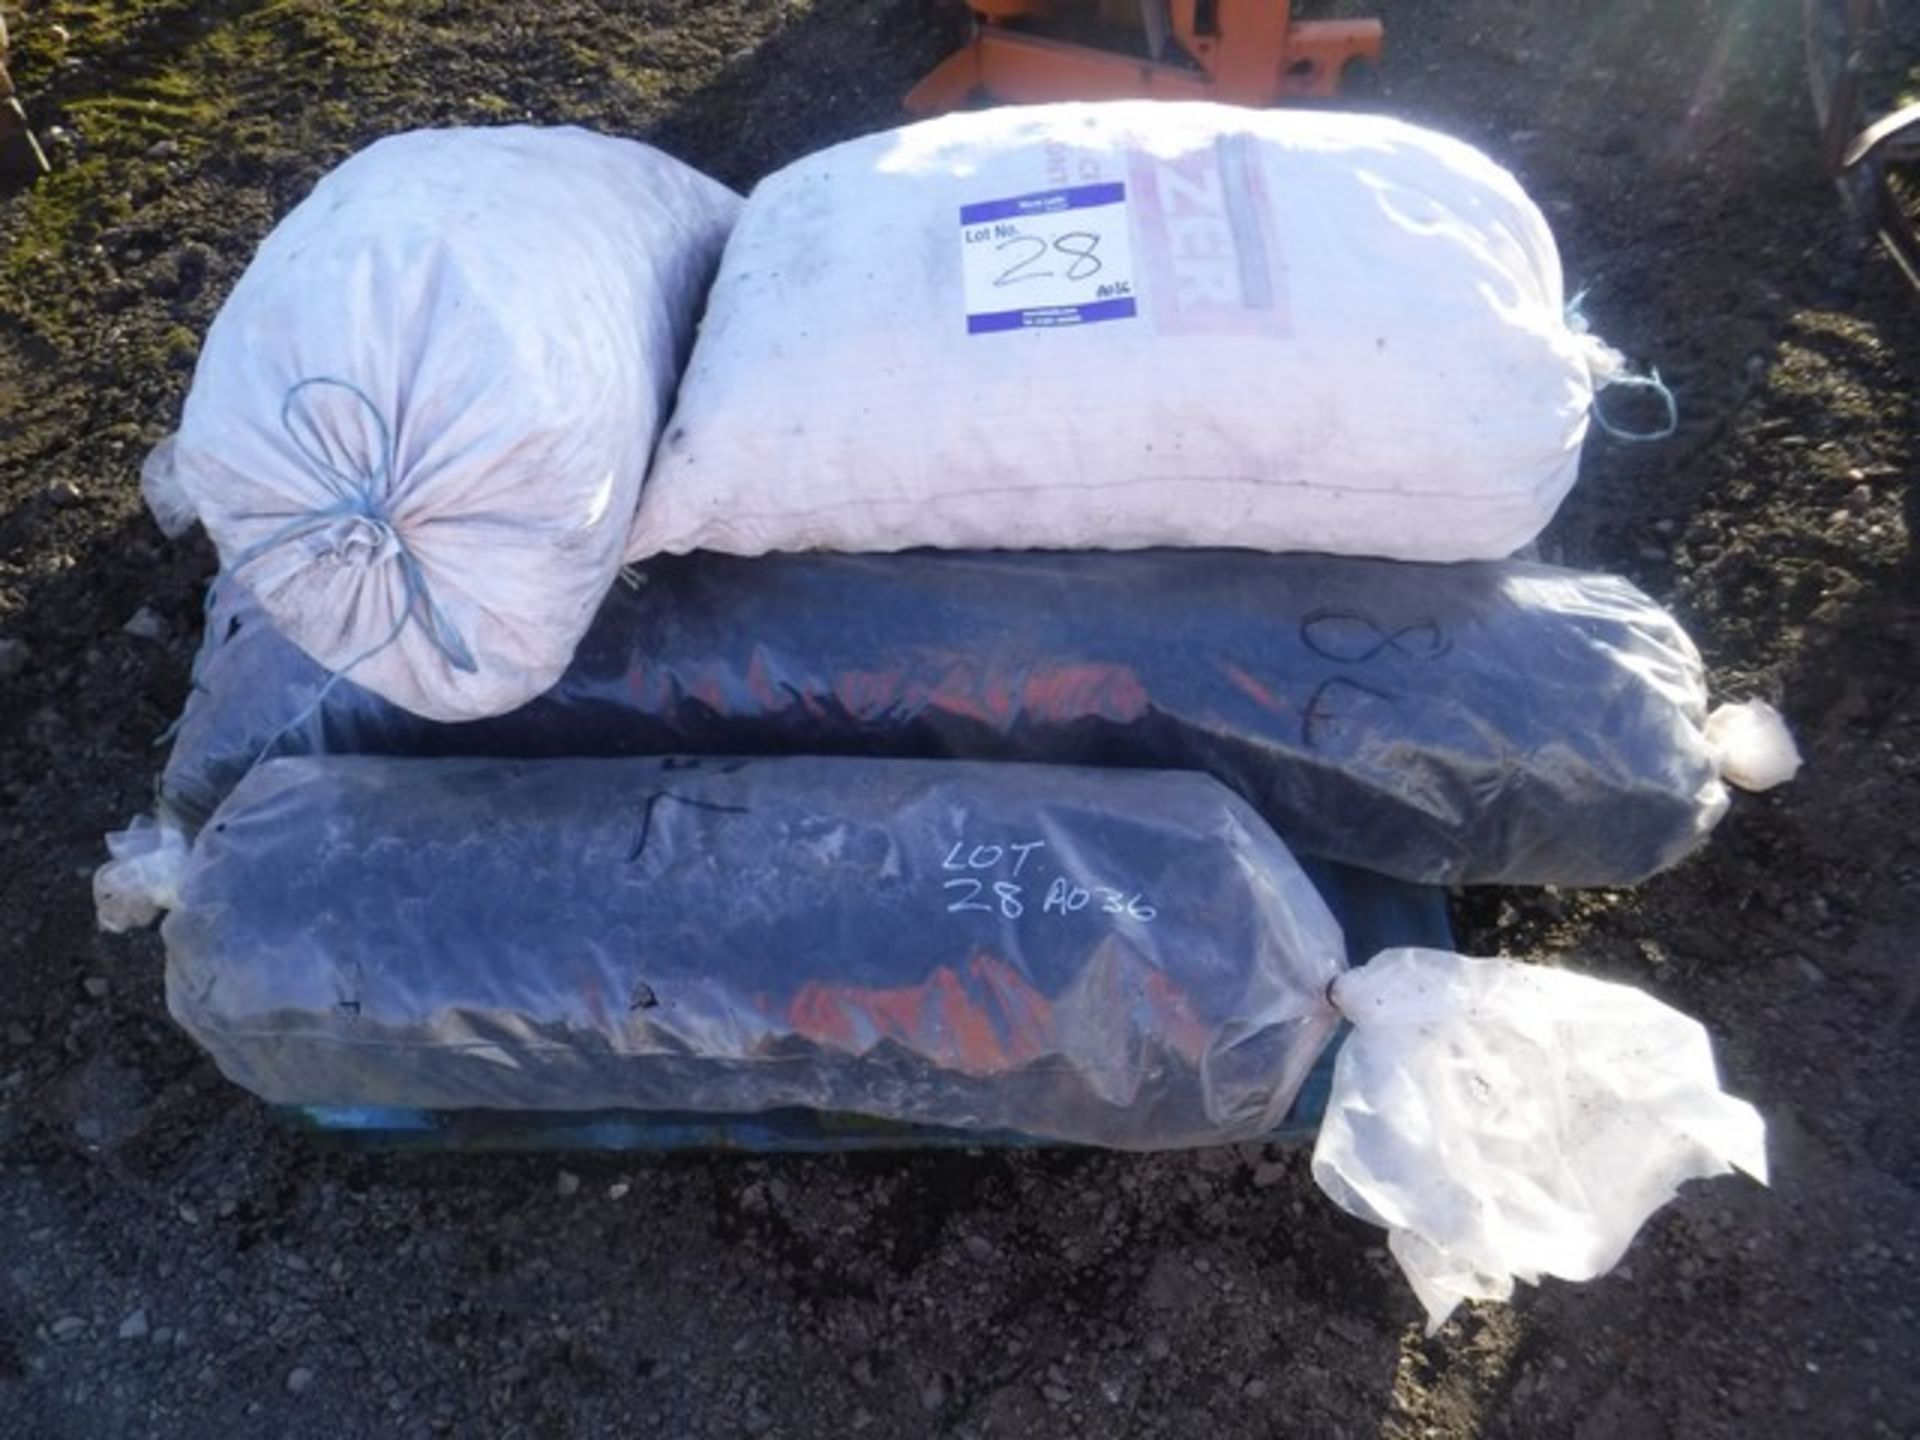 5 x bags of sewage bio media balls